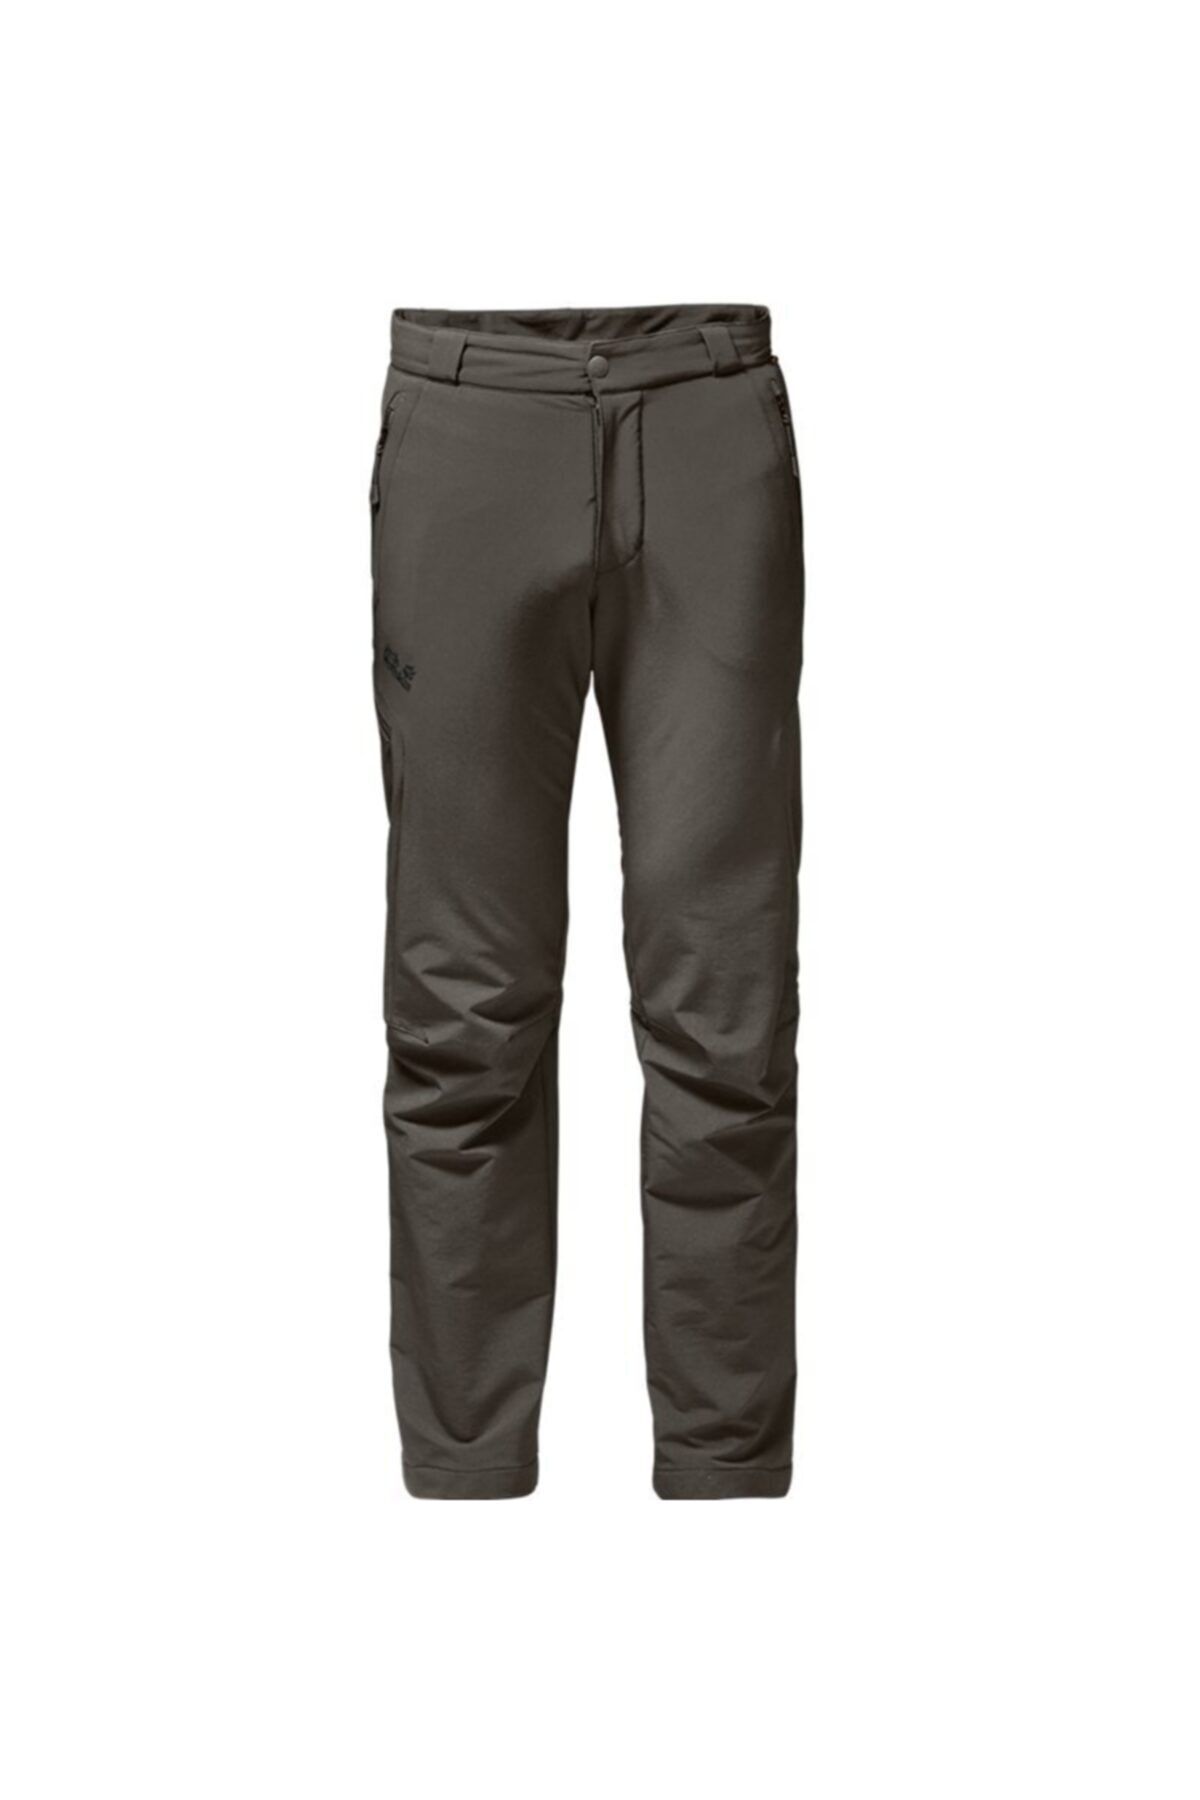 Jack Wolfskin Activate Thermic Pants Erkek Pantolon - 1503601-7010